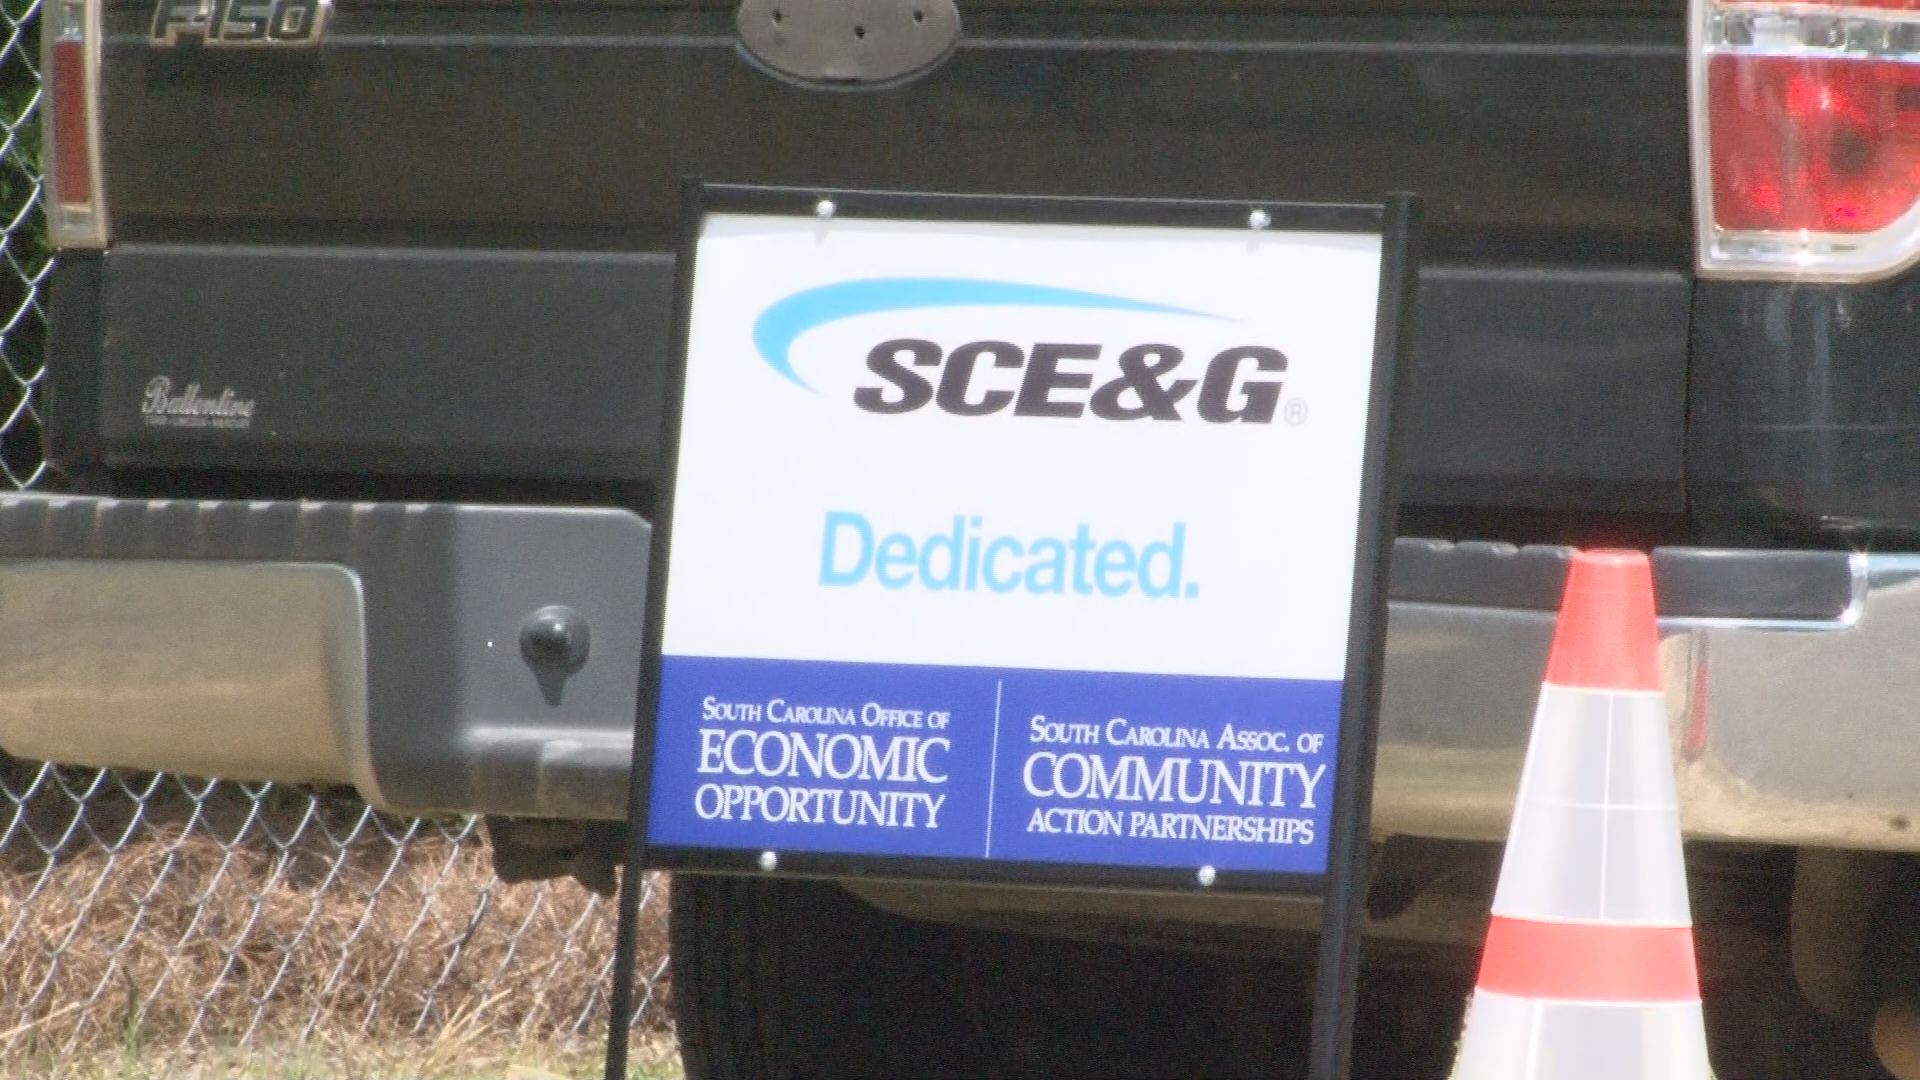 SCE G Help Make A Home More Energy Efficient WFXG FOX 54 News Now